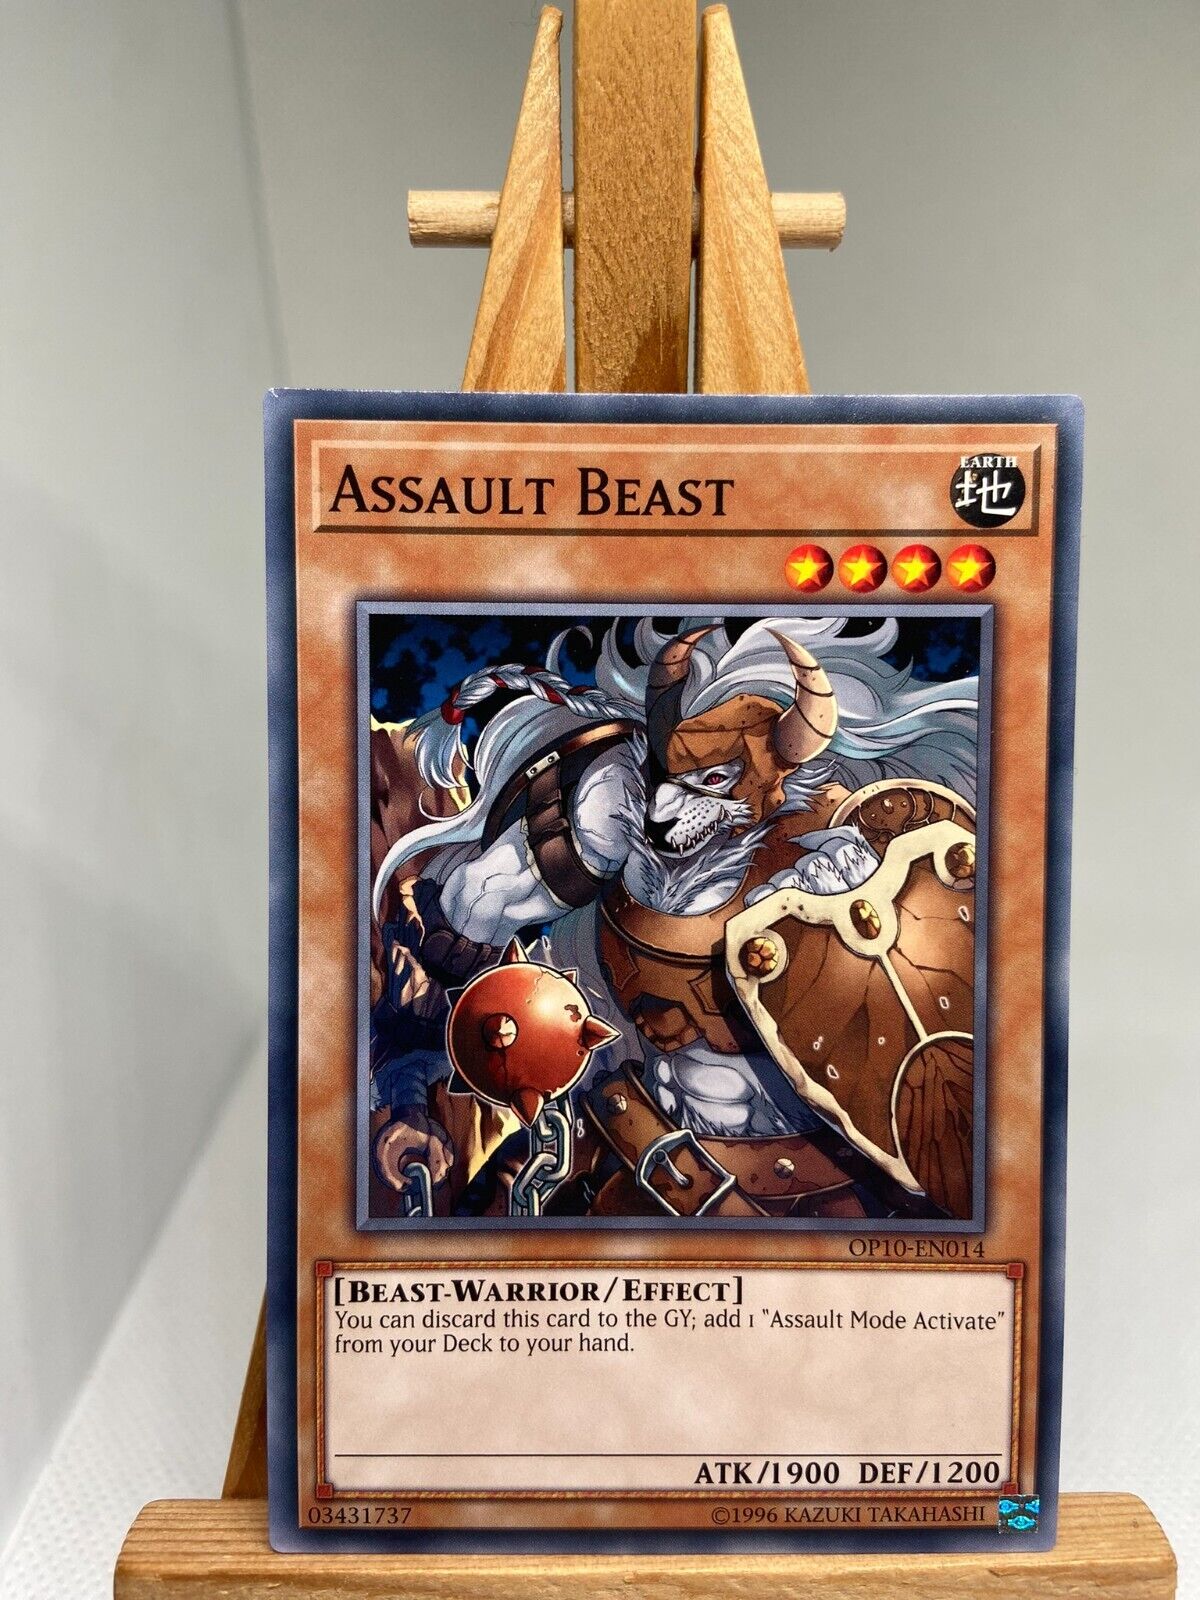 Assault Beast - OP10-EN014 - MP - YuGiOh